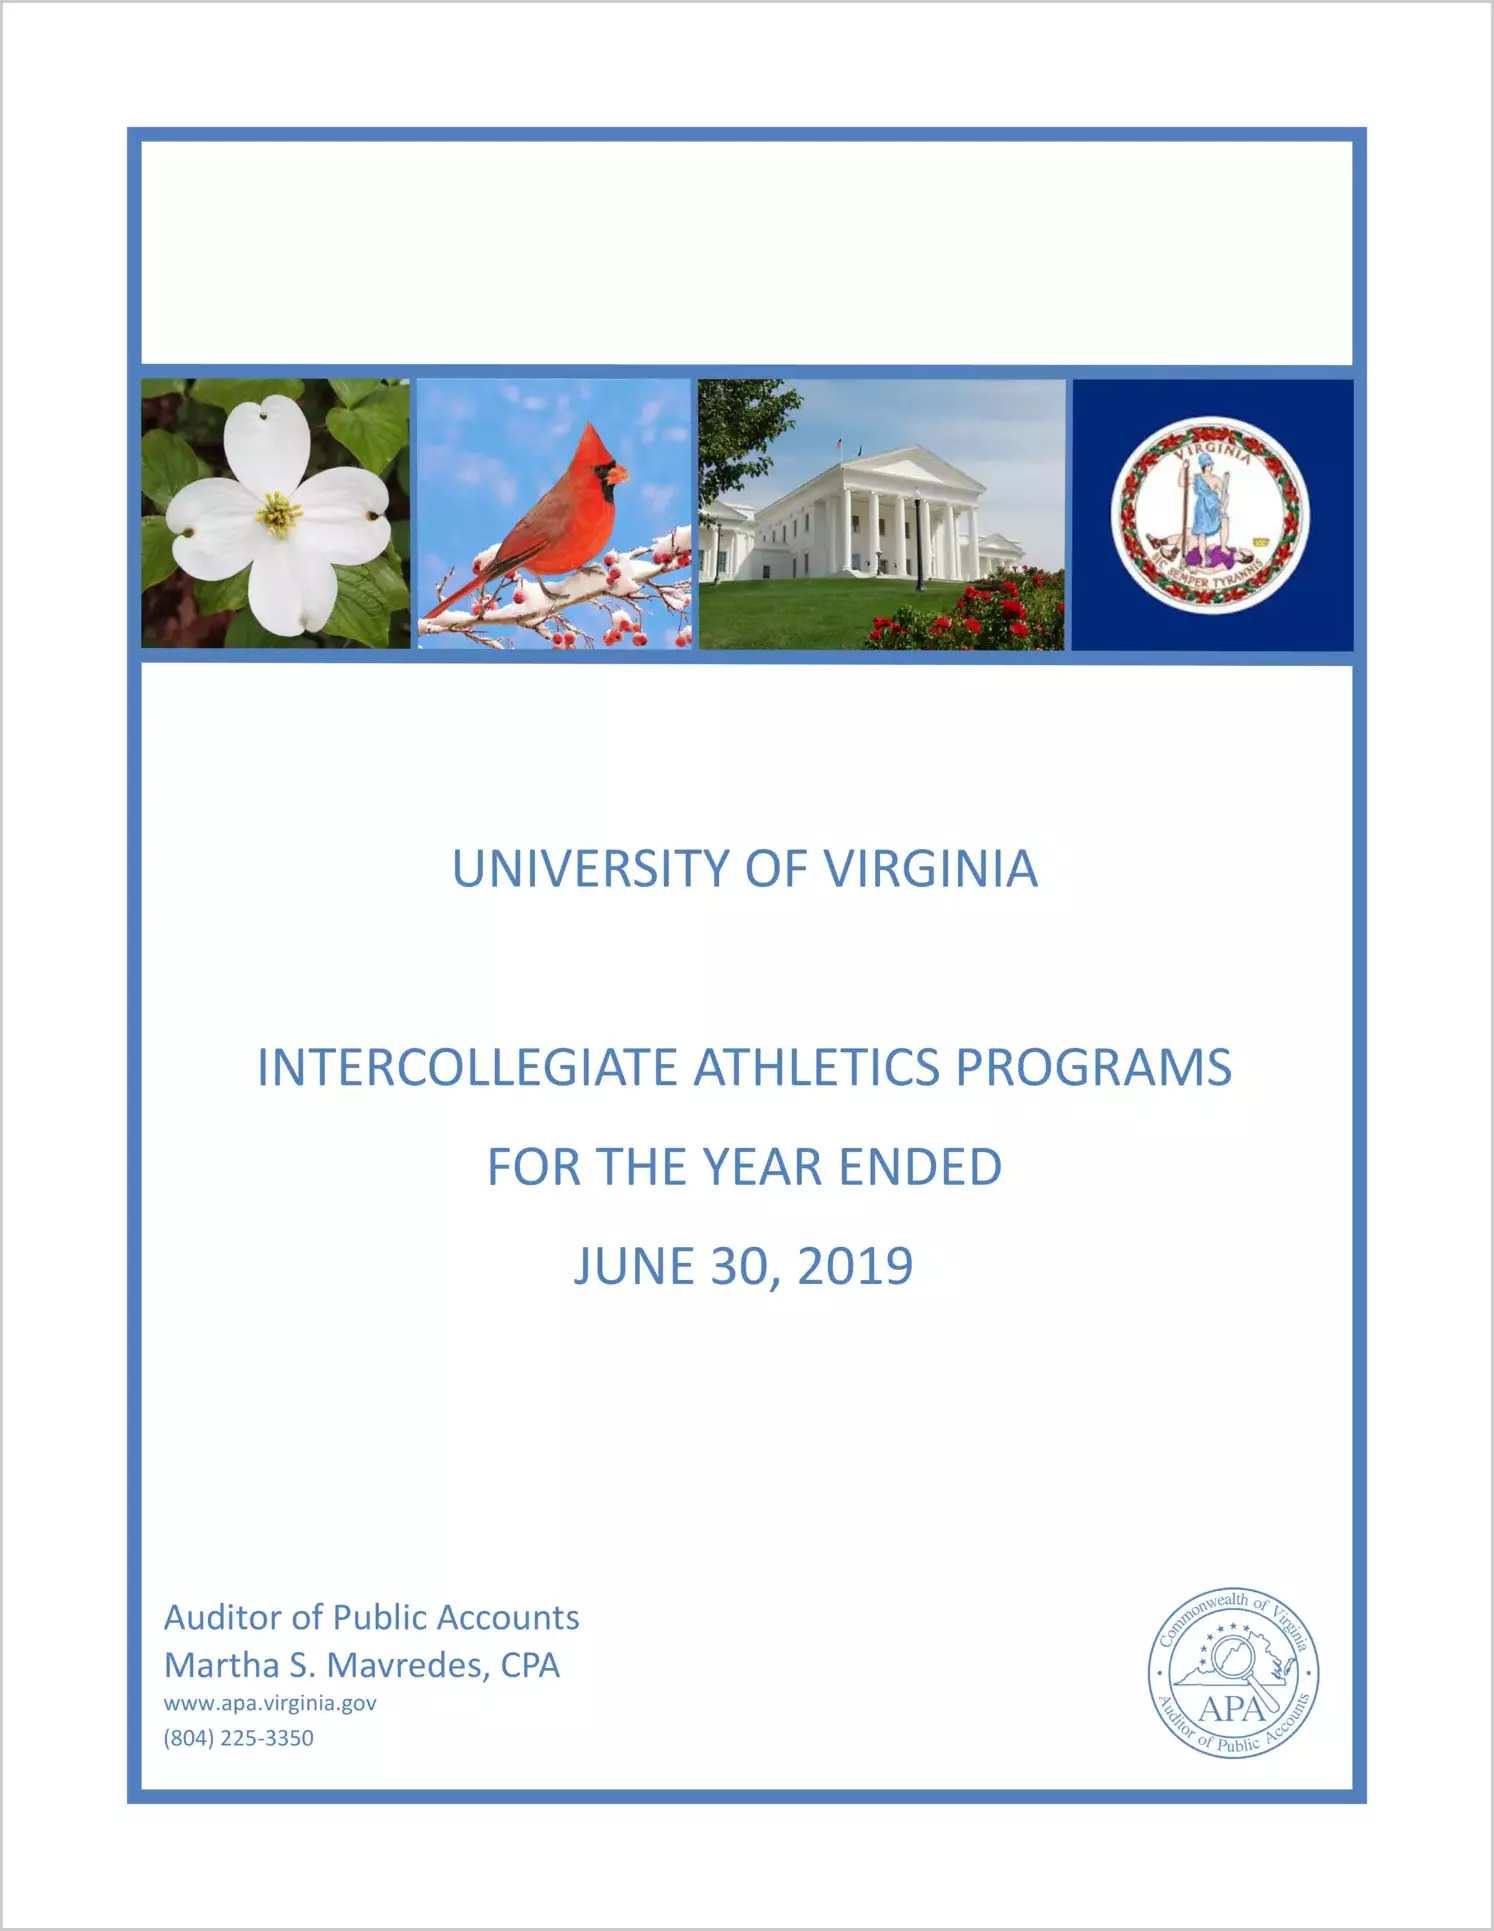 University of Virginia Intercollegiate Athletics Programs for the year ended June 30, 2019